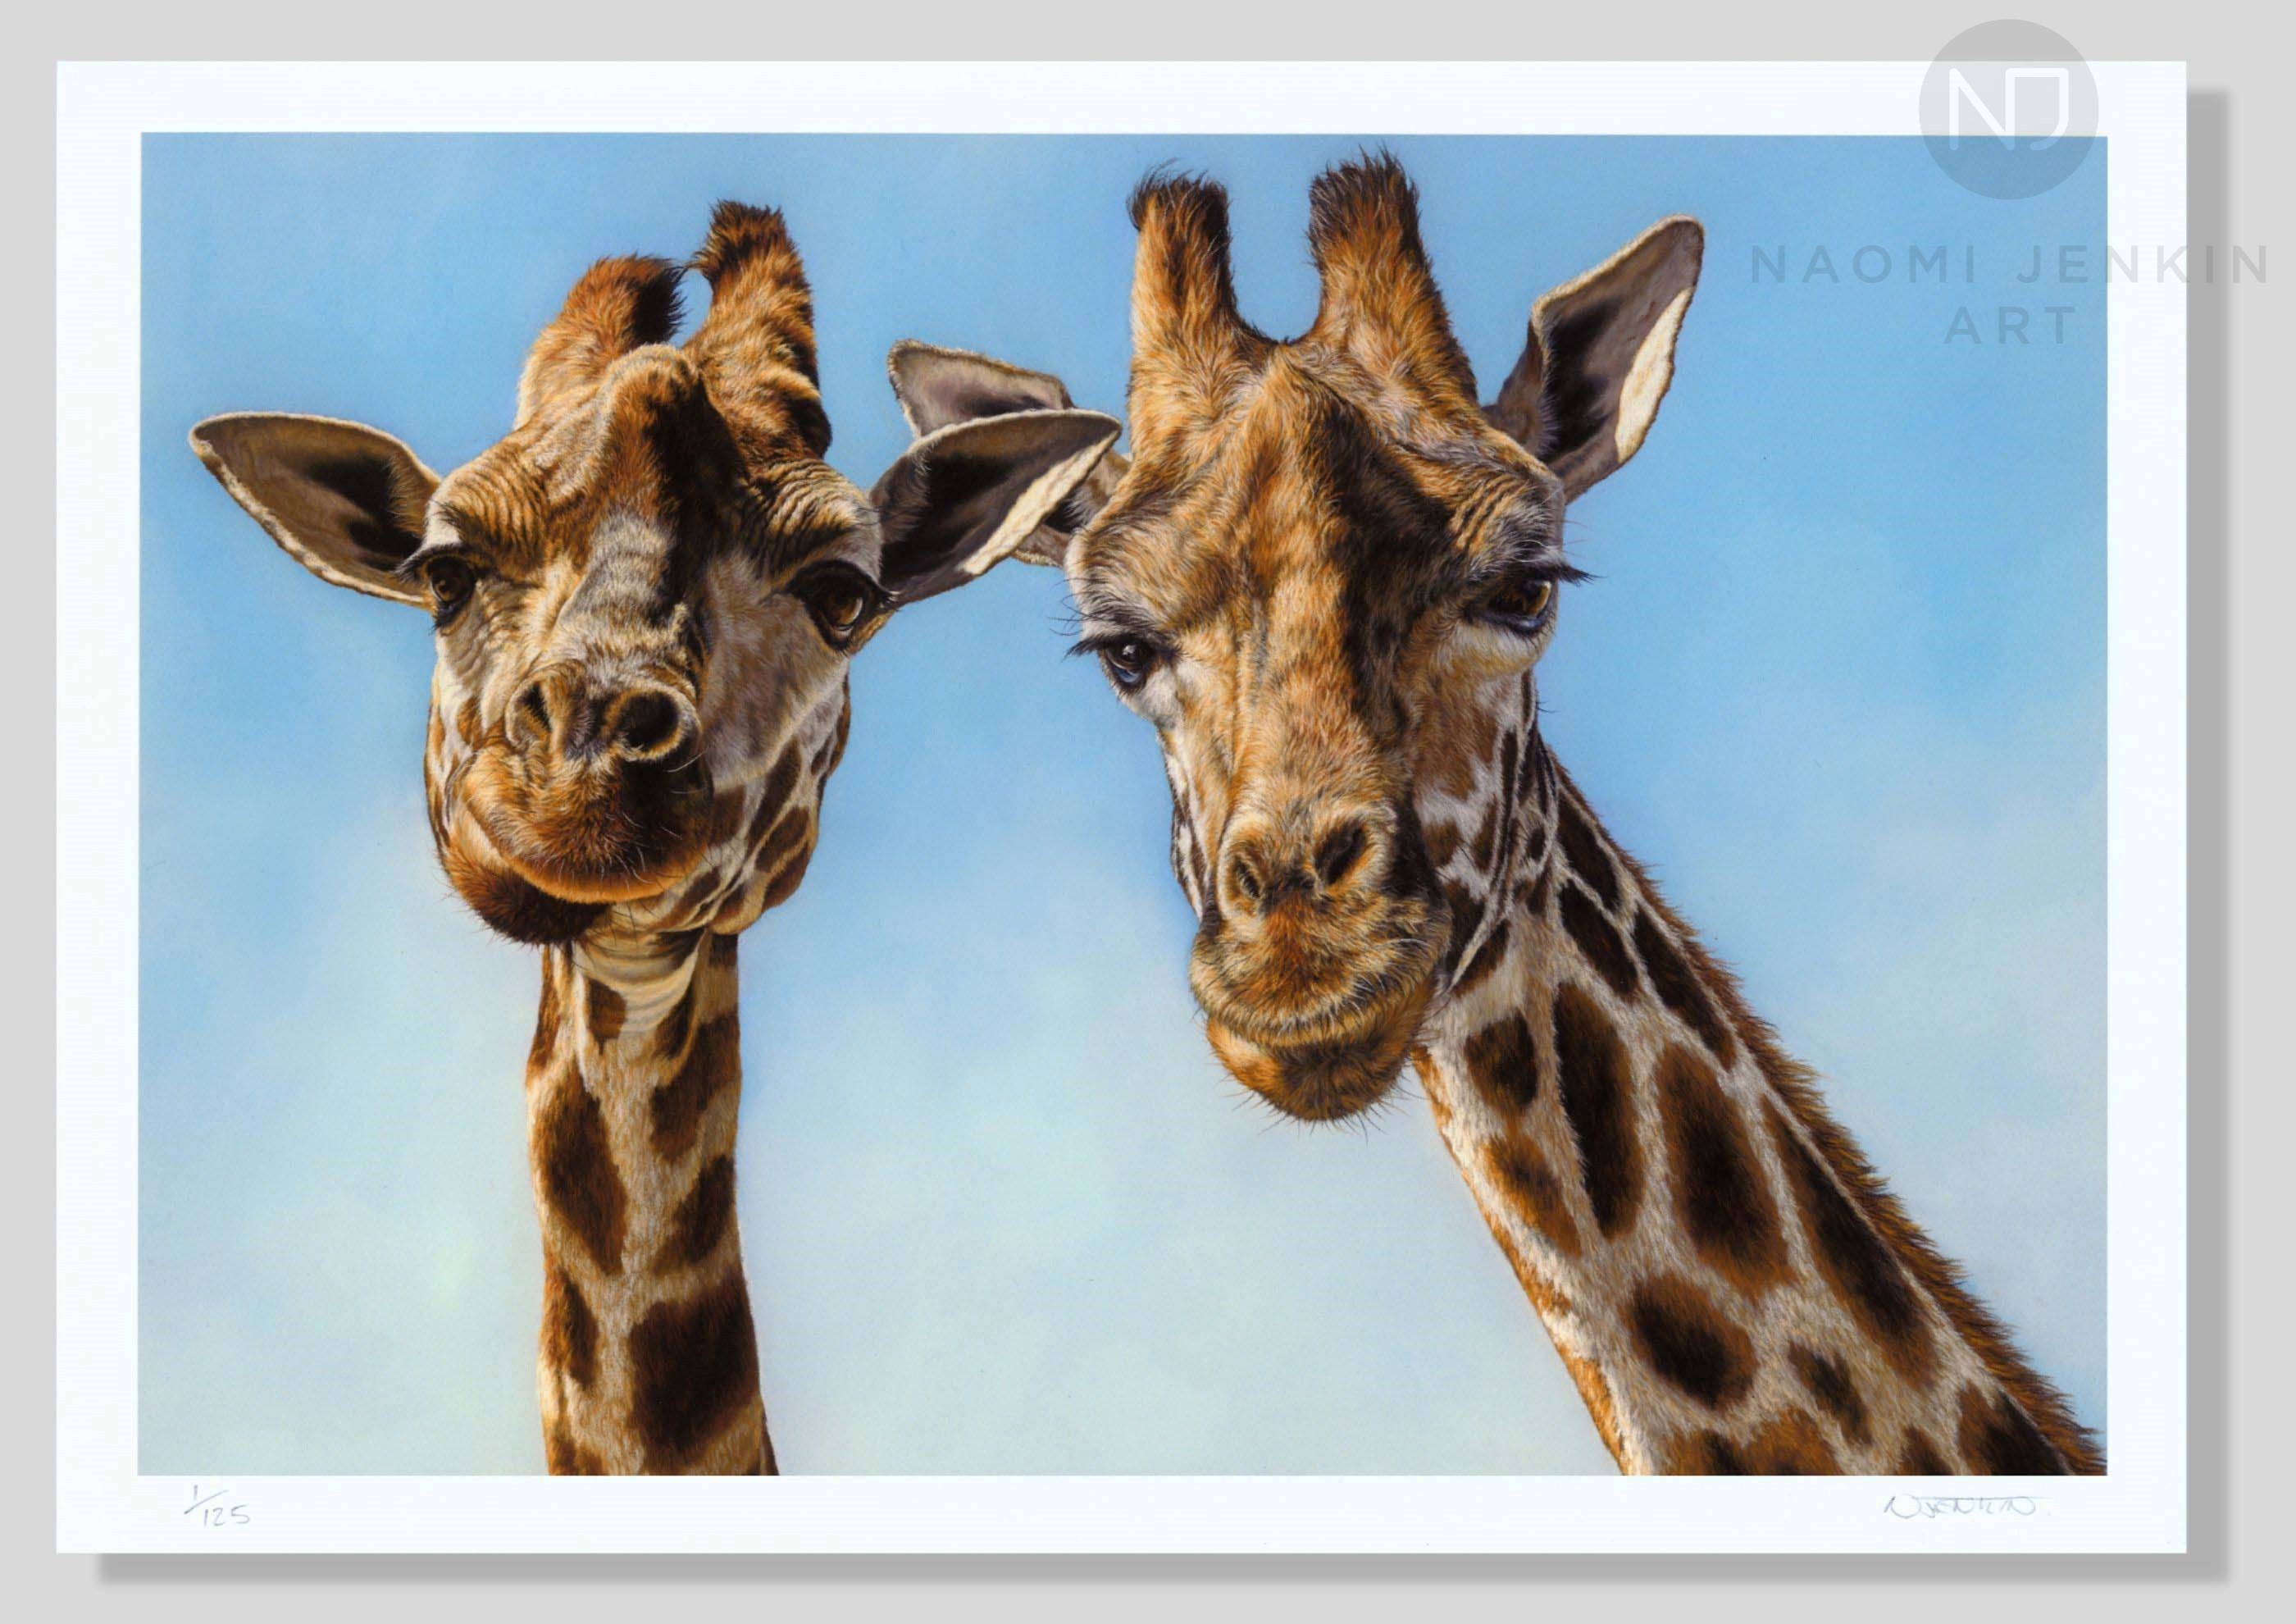 Limited edition fine art print of giraffe painting by wildlife artist Naomi Jenkin.